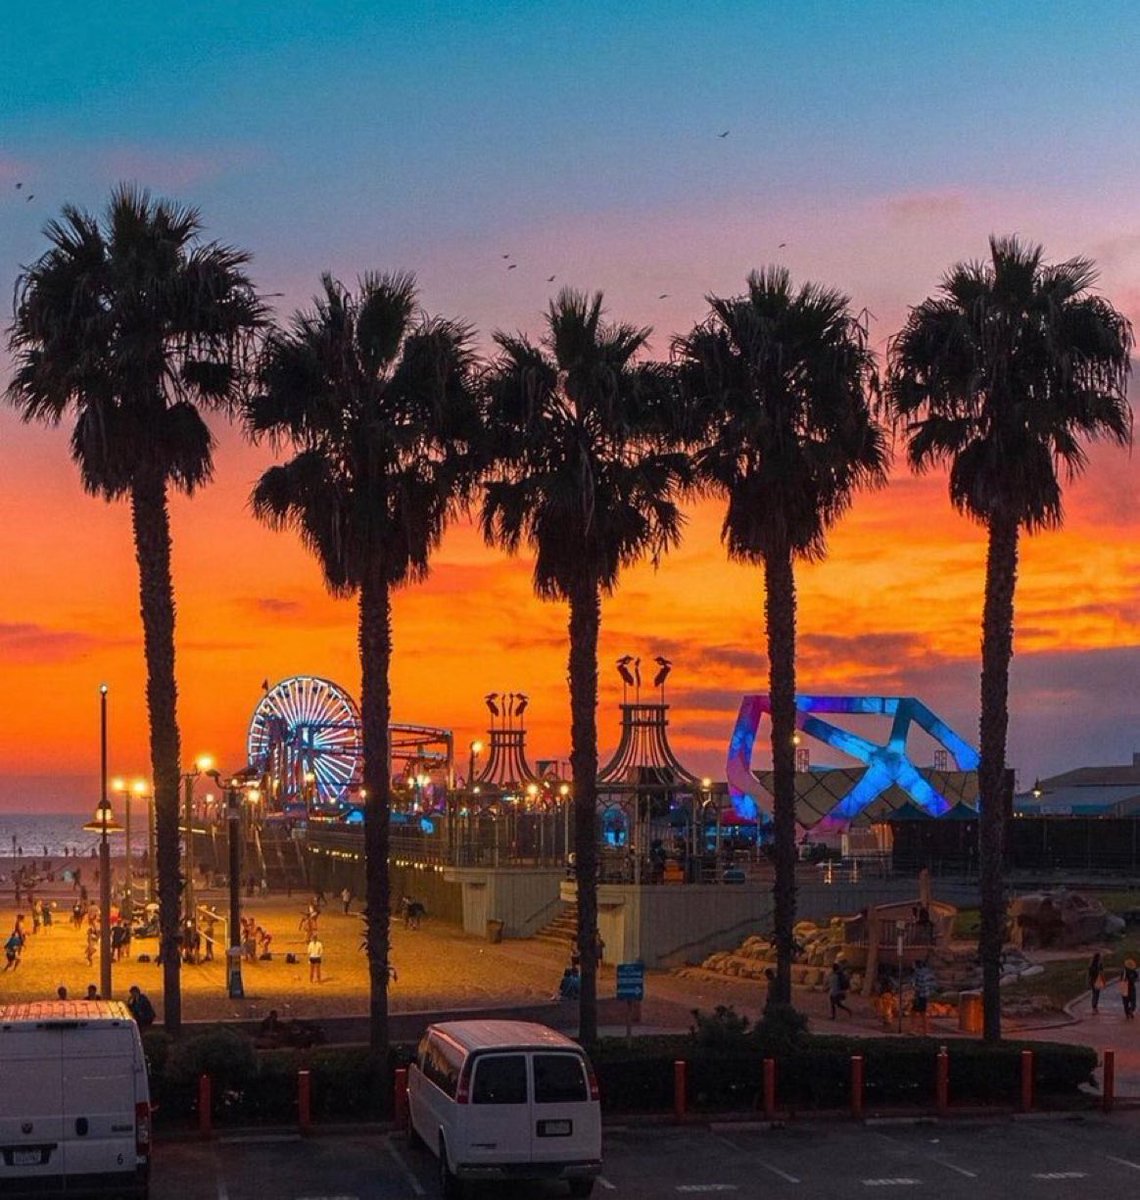 Sunset in California.